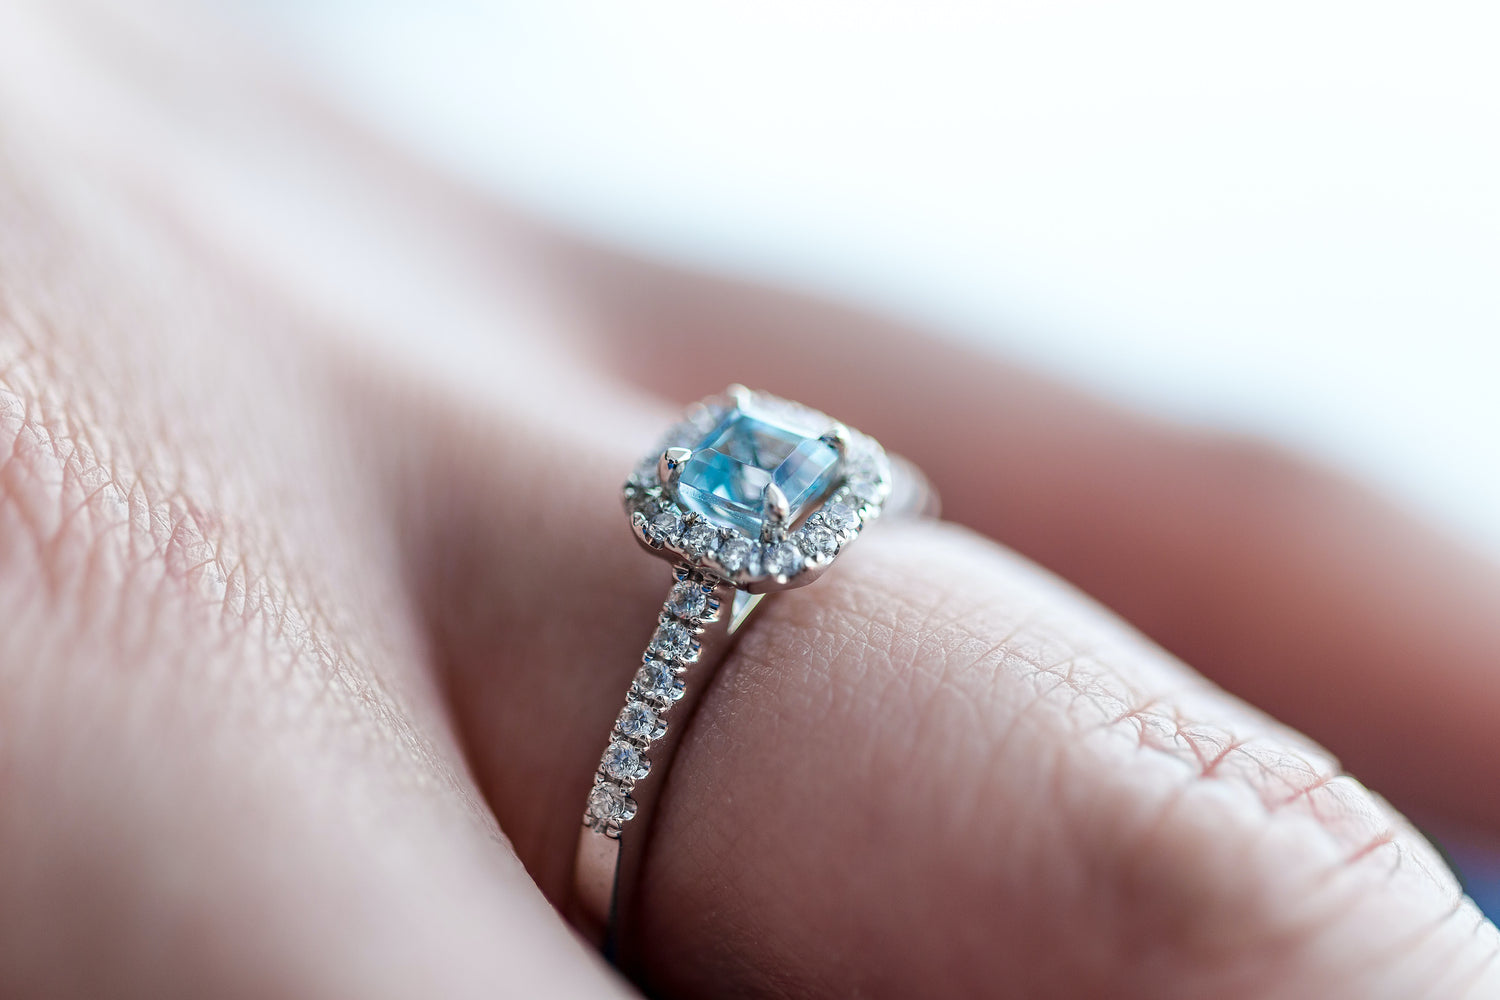 An aquamarine gemstone ring